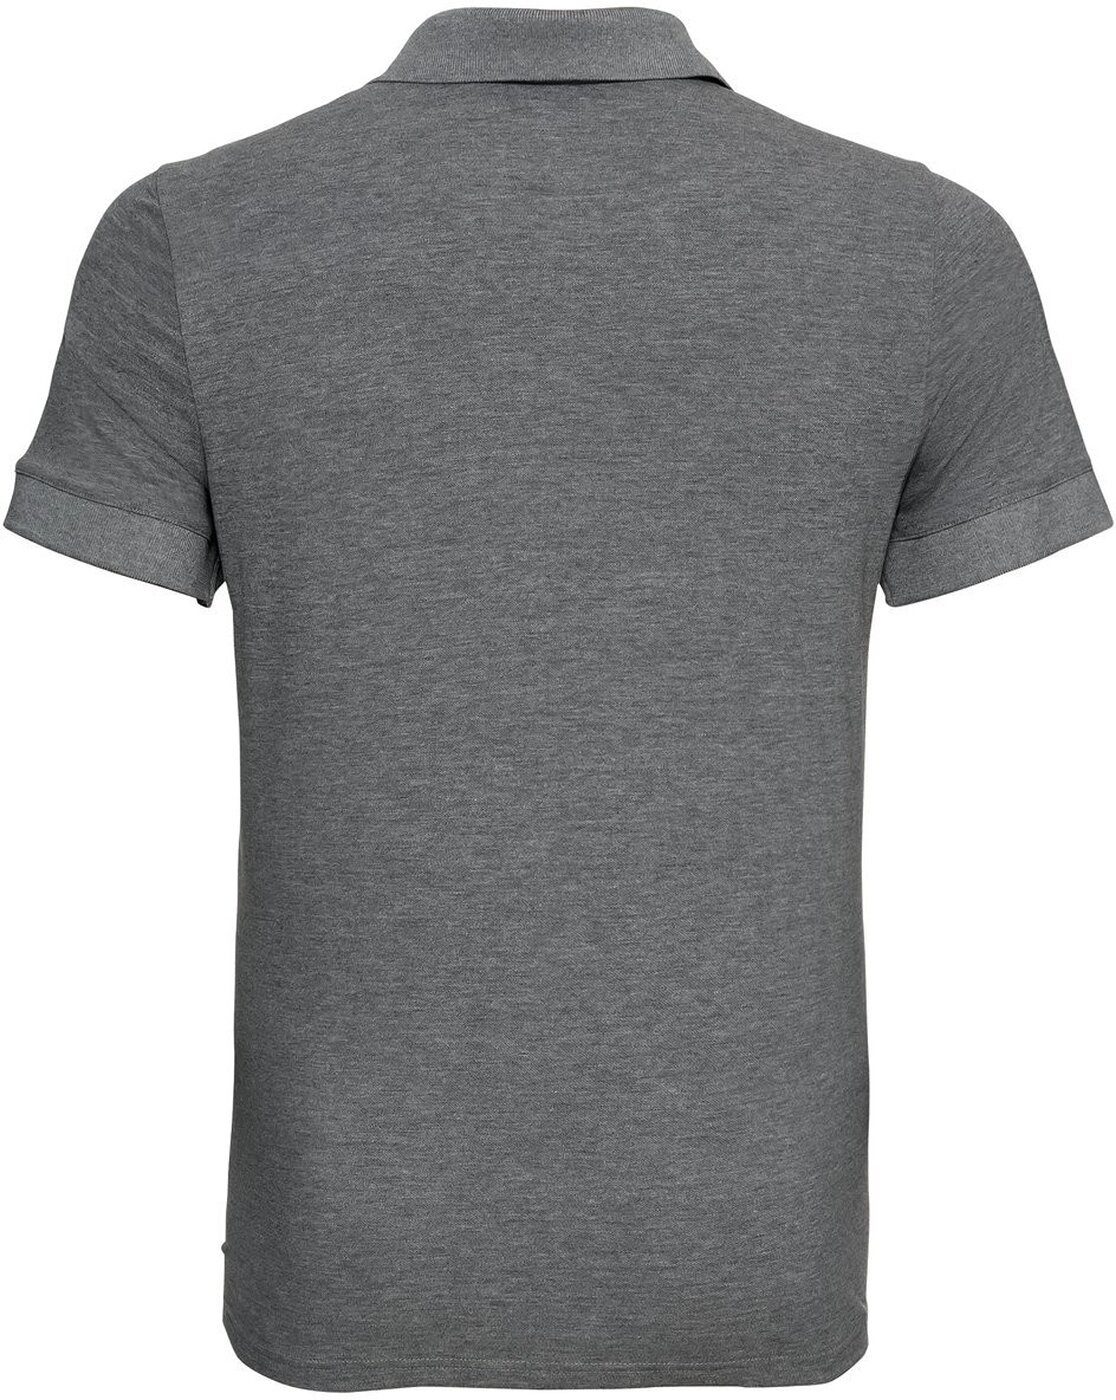 grey graphite Poloshirt shirt Odlo melan 10180 odlo s/s NIKKO Polo